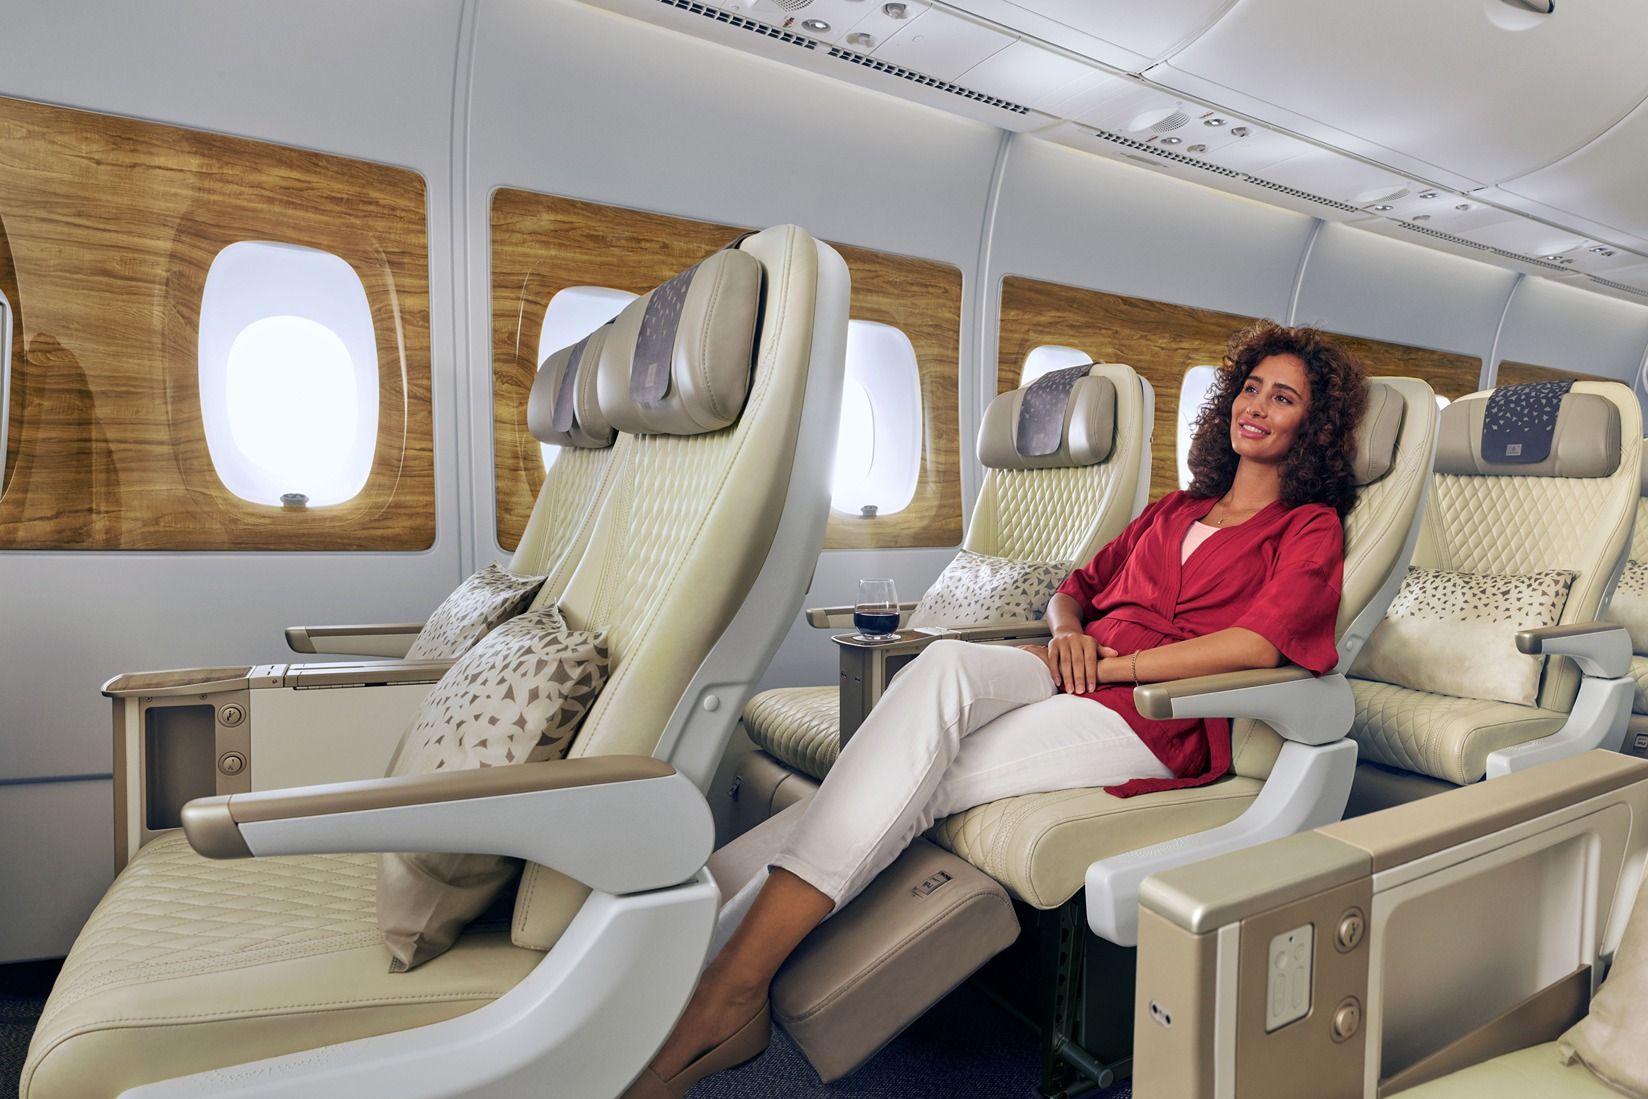 Emirates Premium Economy seat with pax